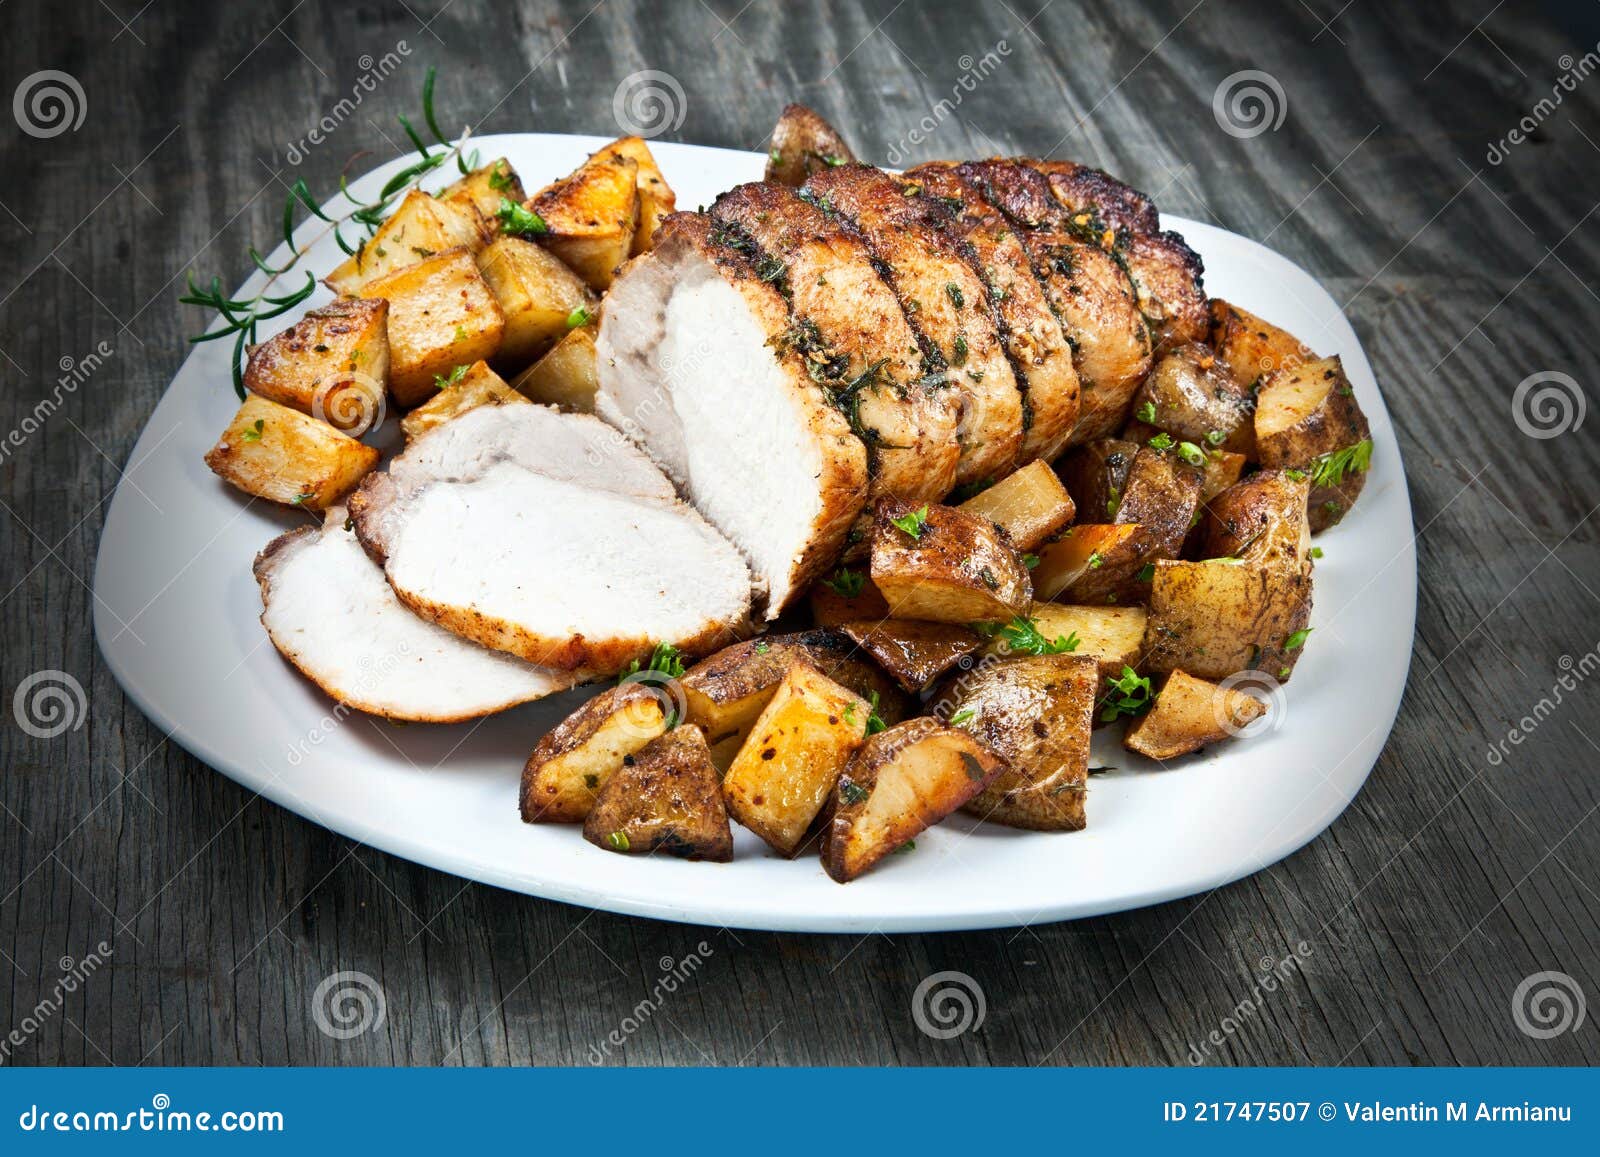 sliced roast pork loin on a platter